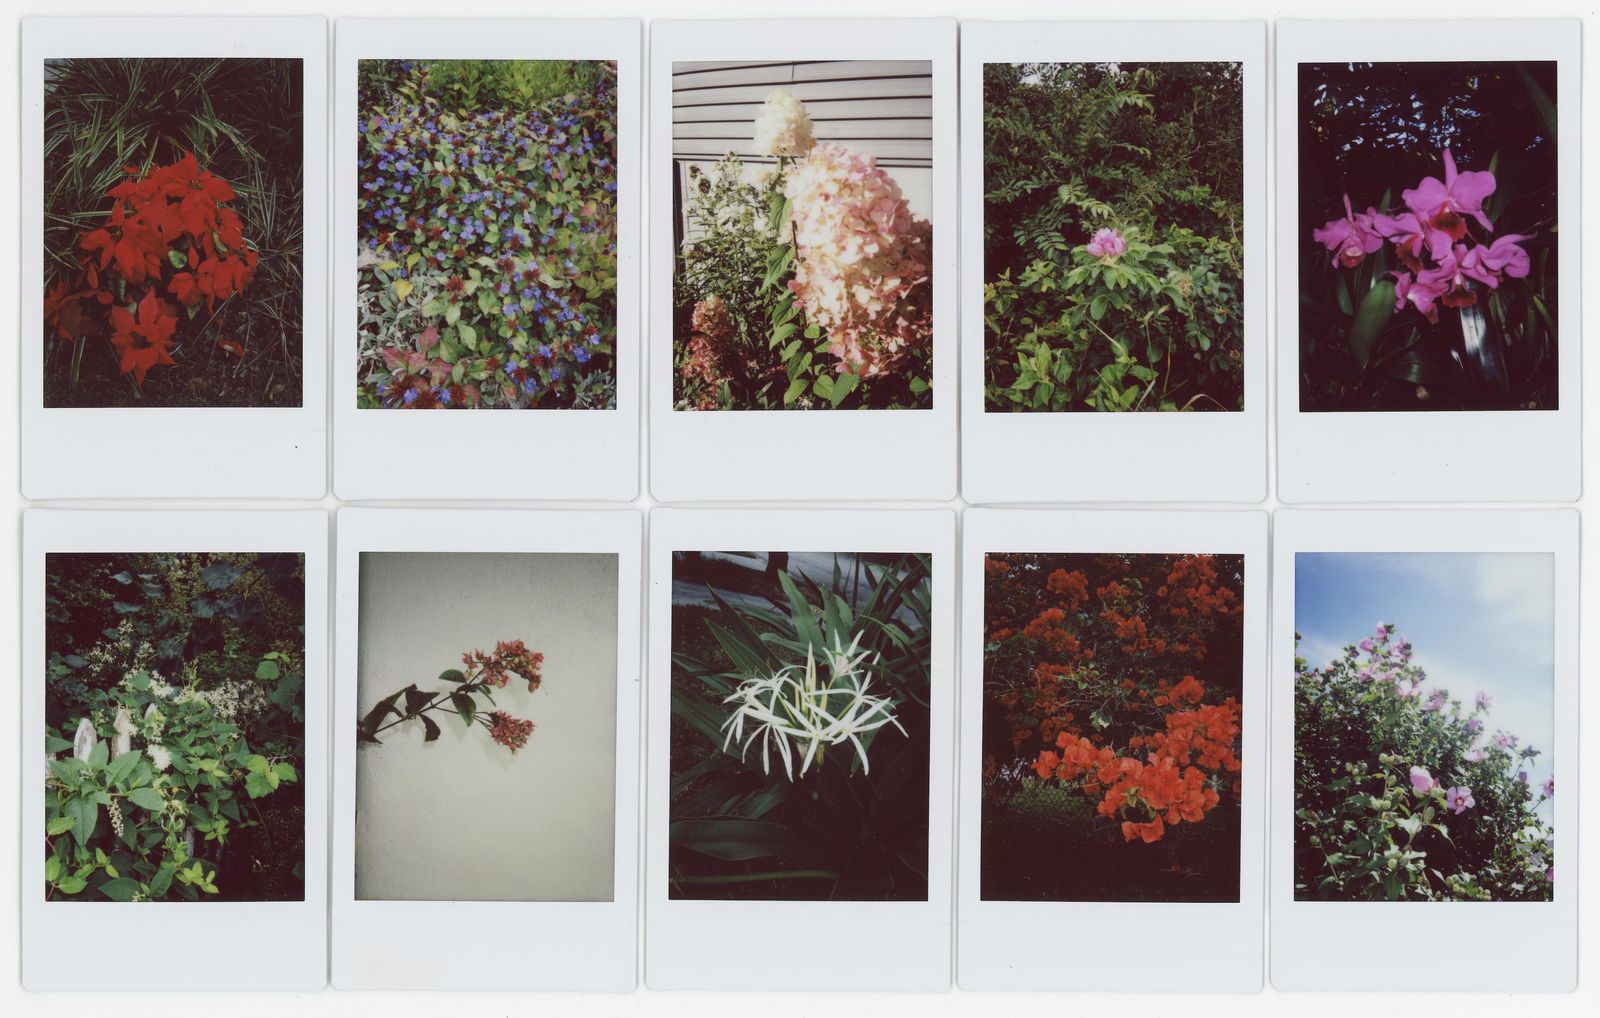 © RACHEL TREIDE - "A Minute Fraction of All the Flowers I've Ever Seen," photographs 21-30